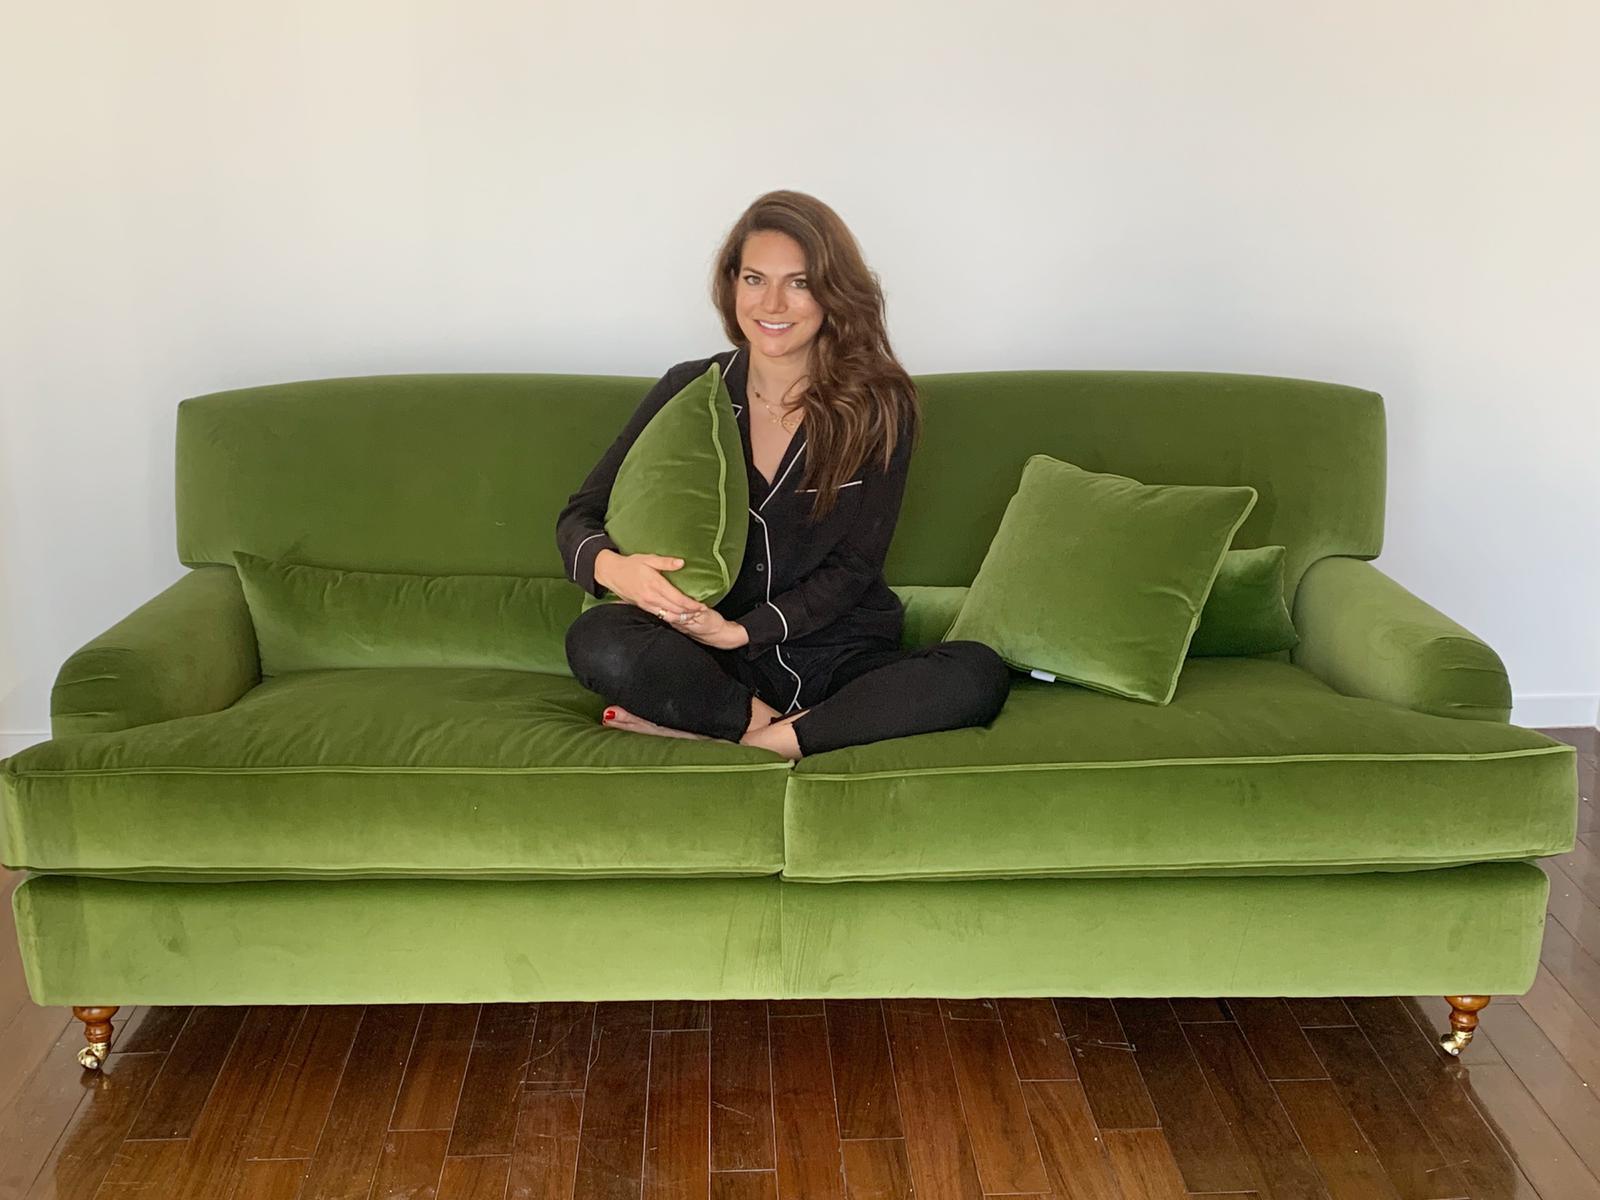 Dolce Vita: Kate Macklin’s Love Affair with Italian Furniture